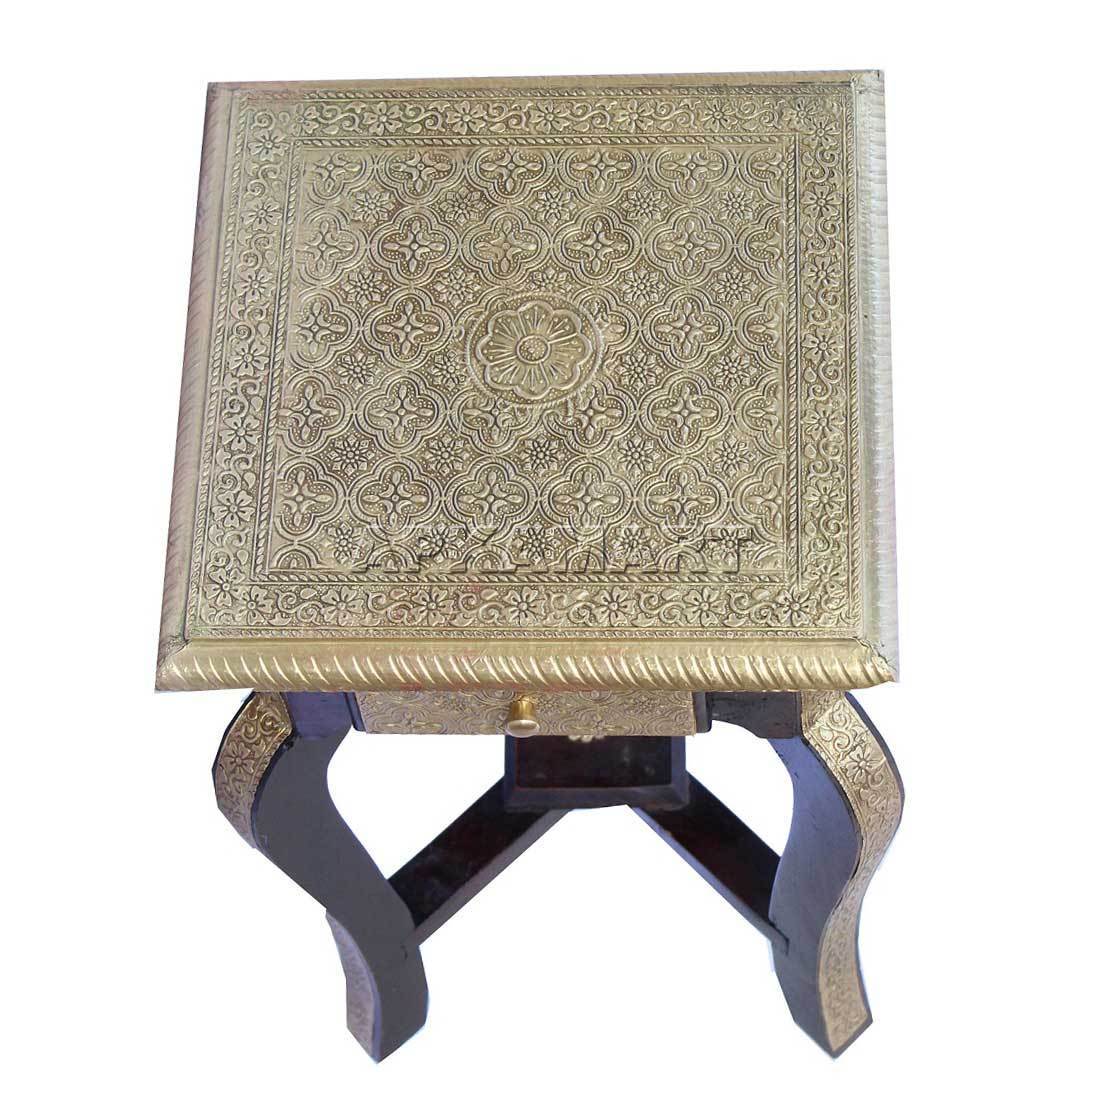 Lamp Table - Brass Embellished  | Bedside Table with Drawer -18 Inch - ApkaMart